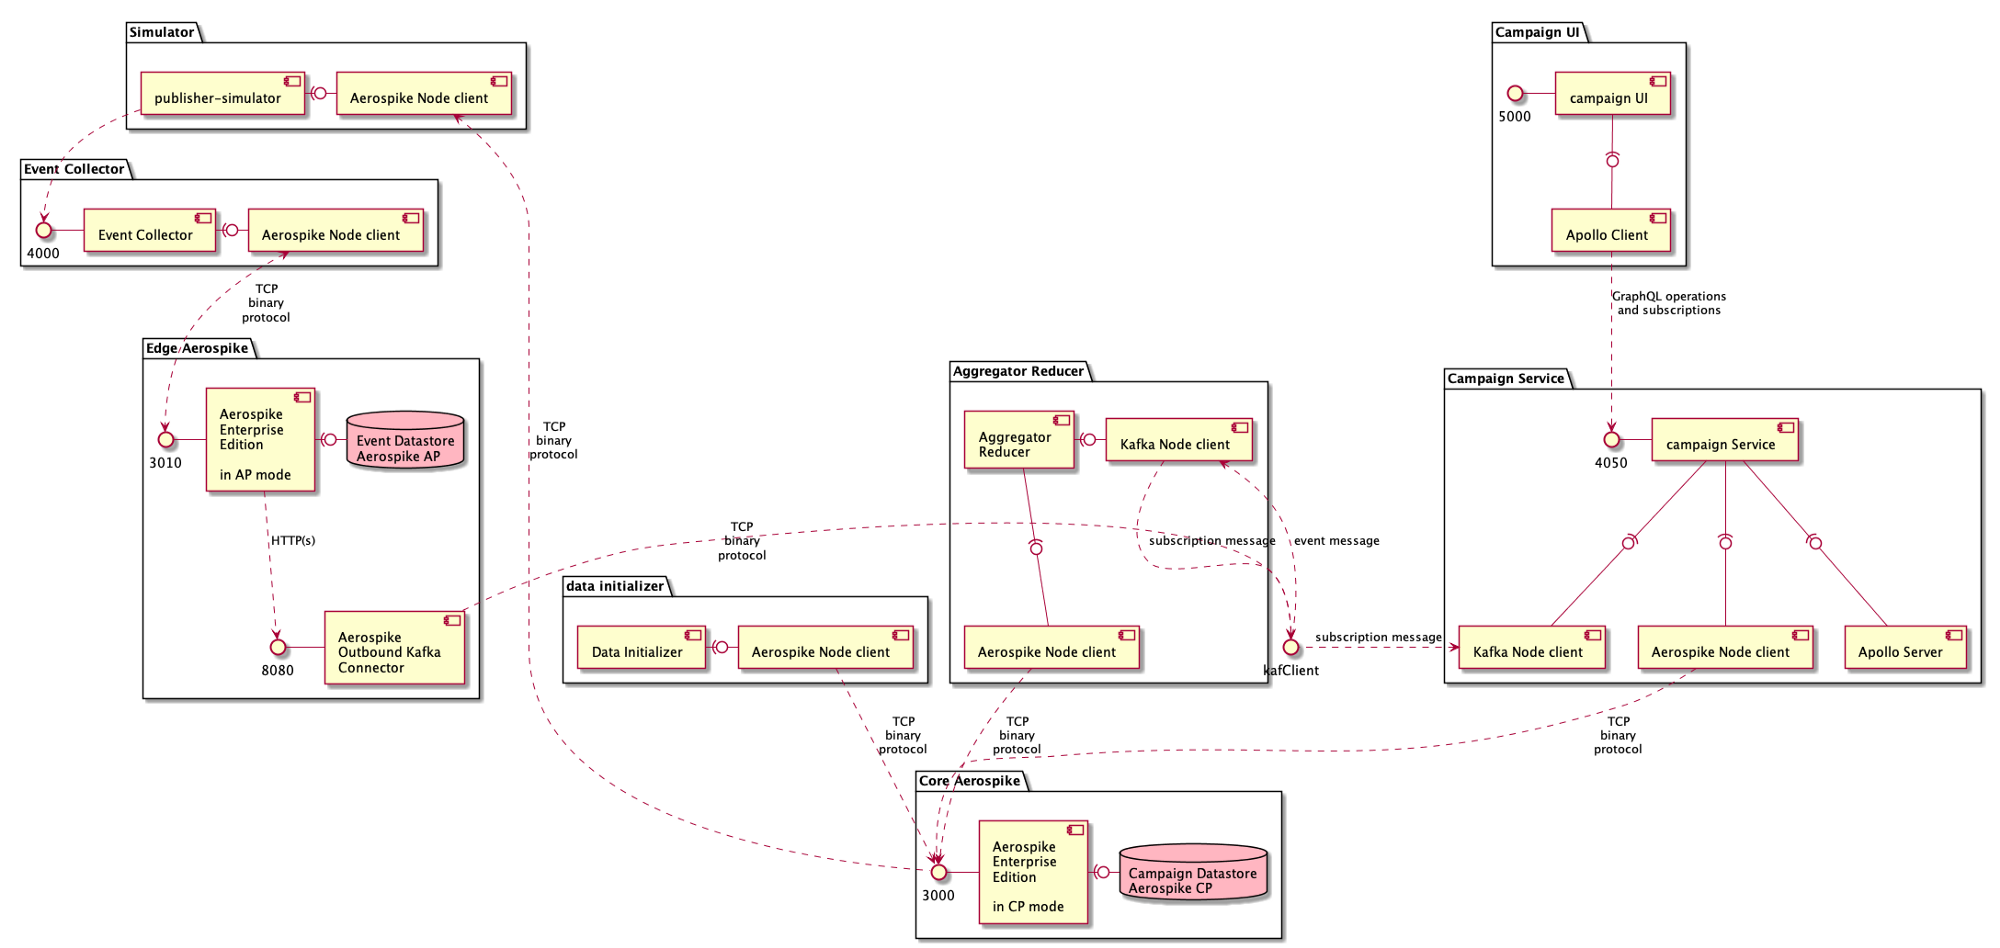 diagram-dev-Campaign-Service-Campaign-UI-Component-Interaction